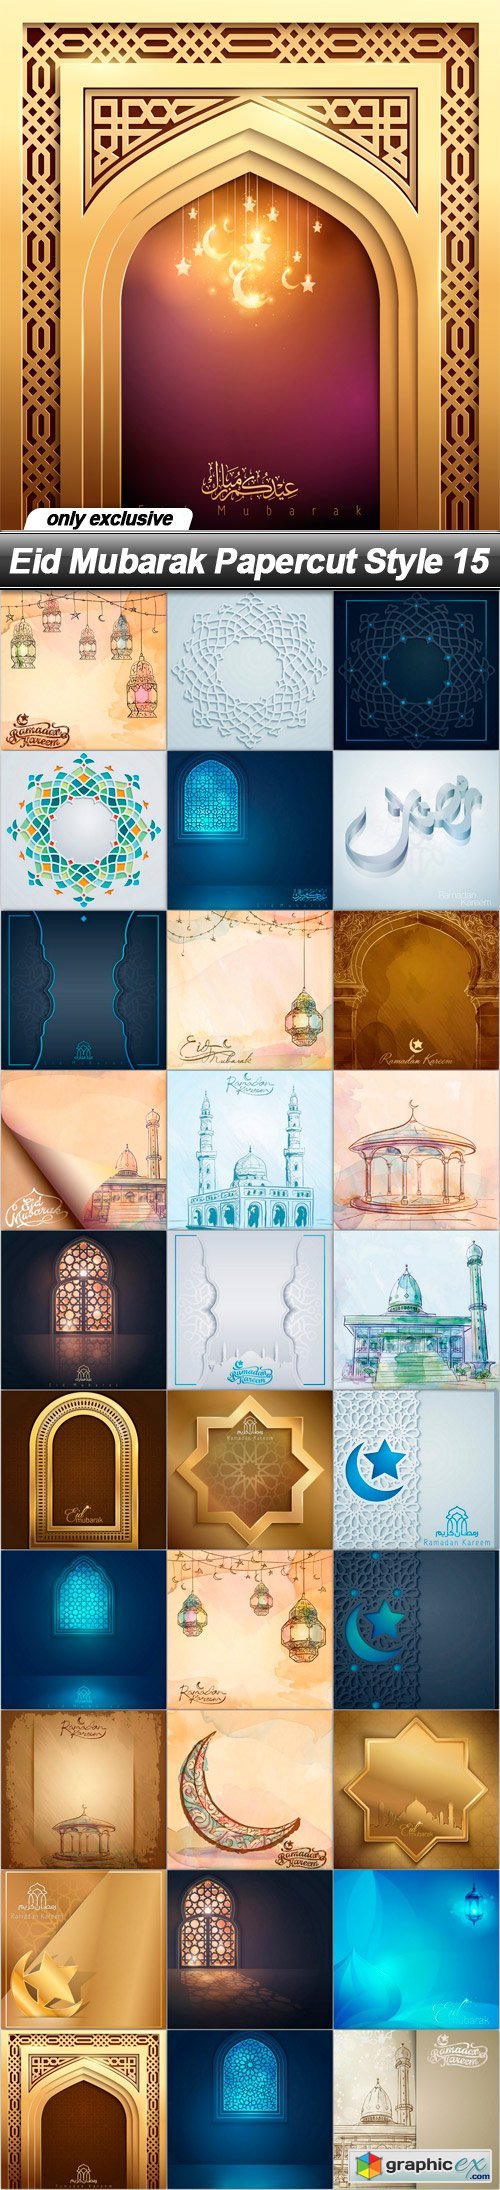 Eid Mubarak Papercut Style 15 - 58 EPS